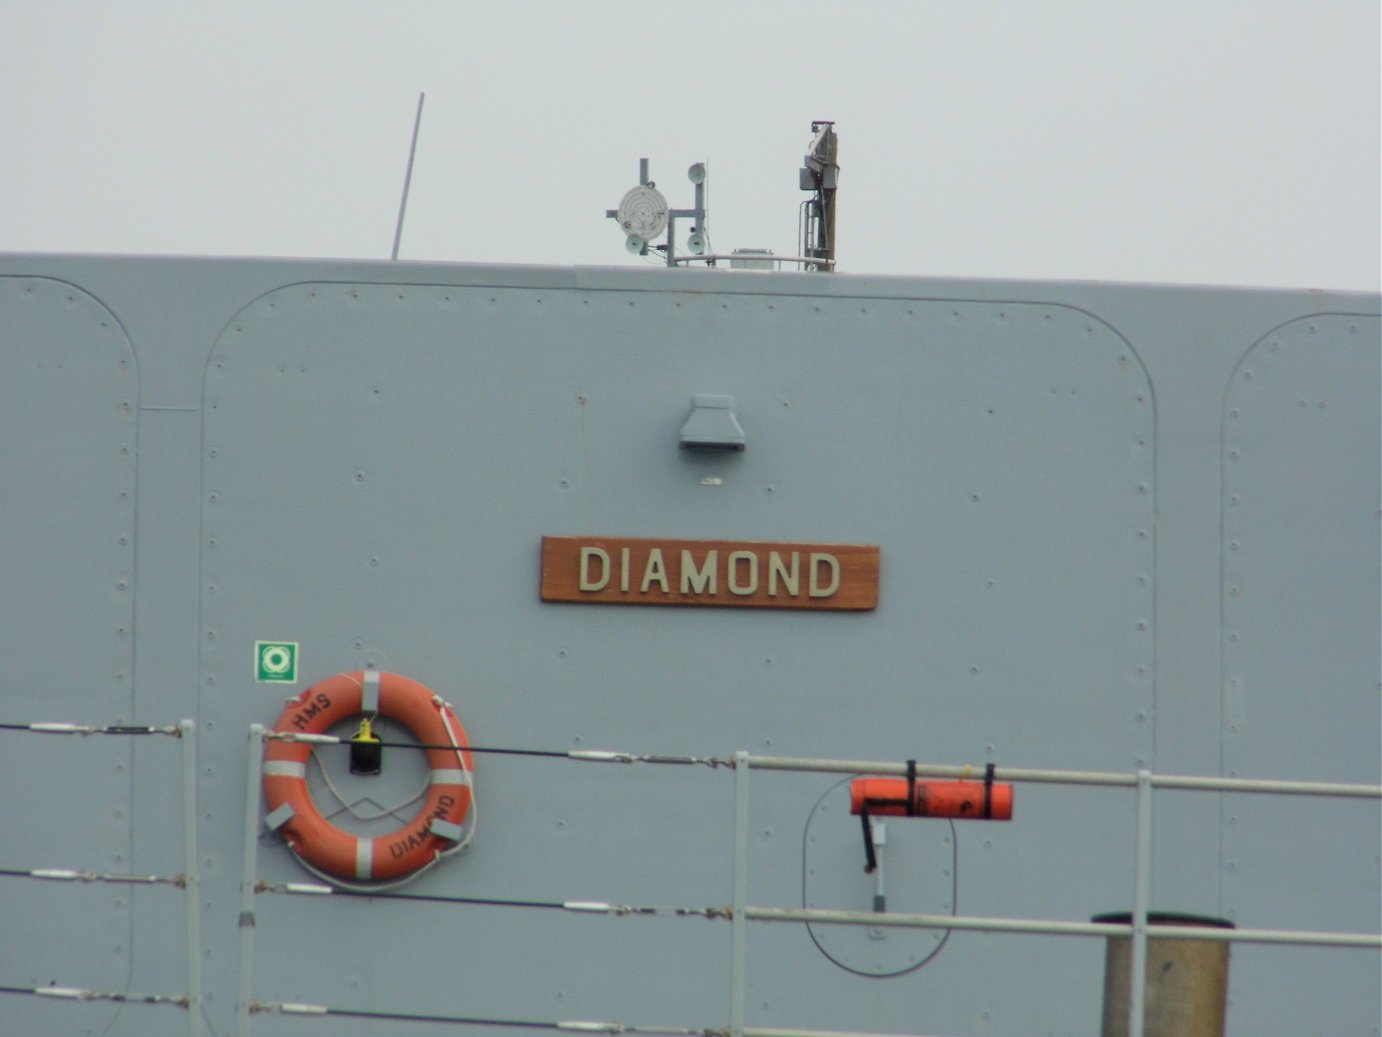 Type 45 destroyer H.M.S. Diamond D34 at Portsmouth Naval Base 23 April 2019